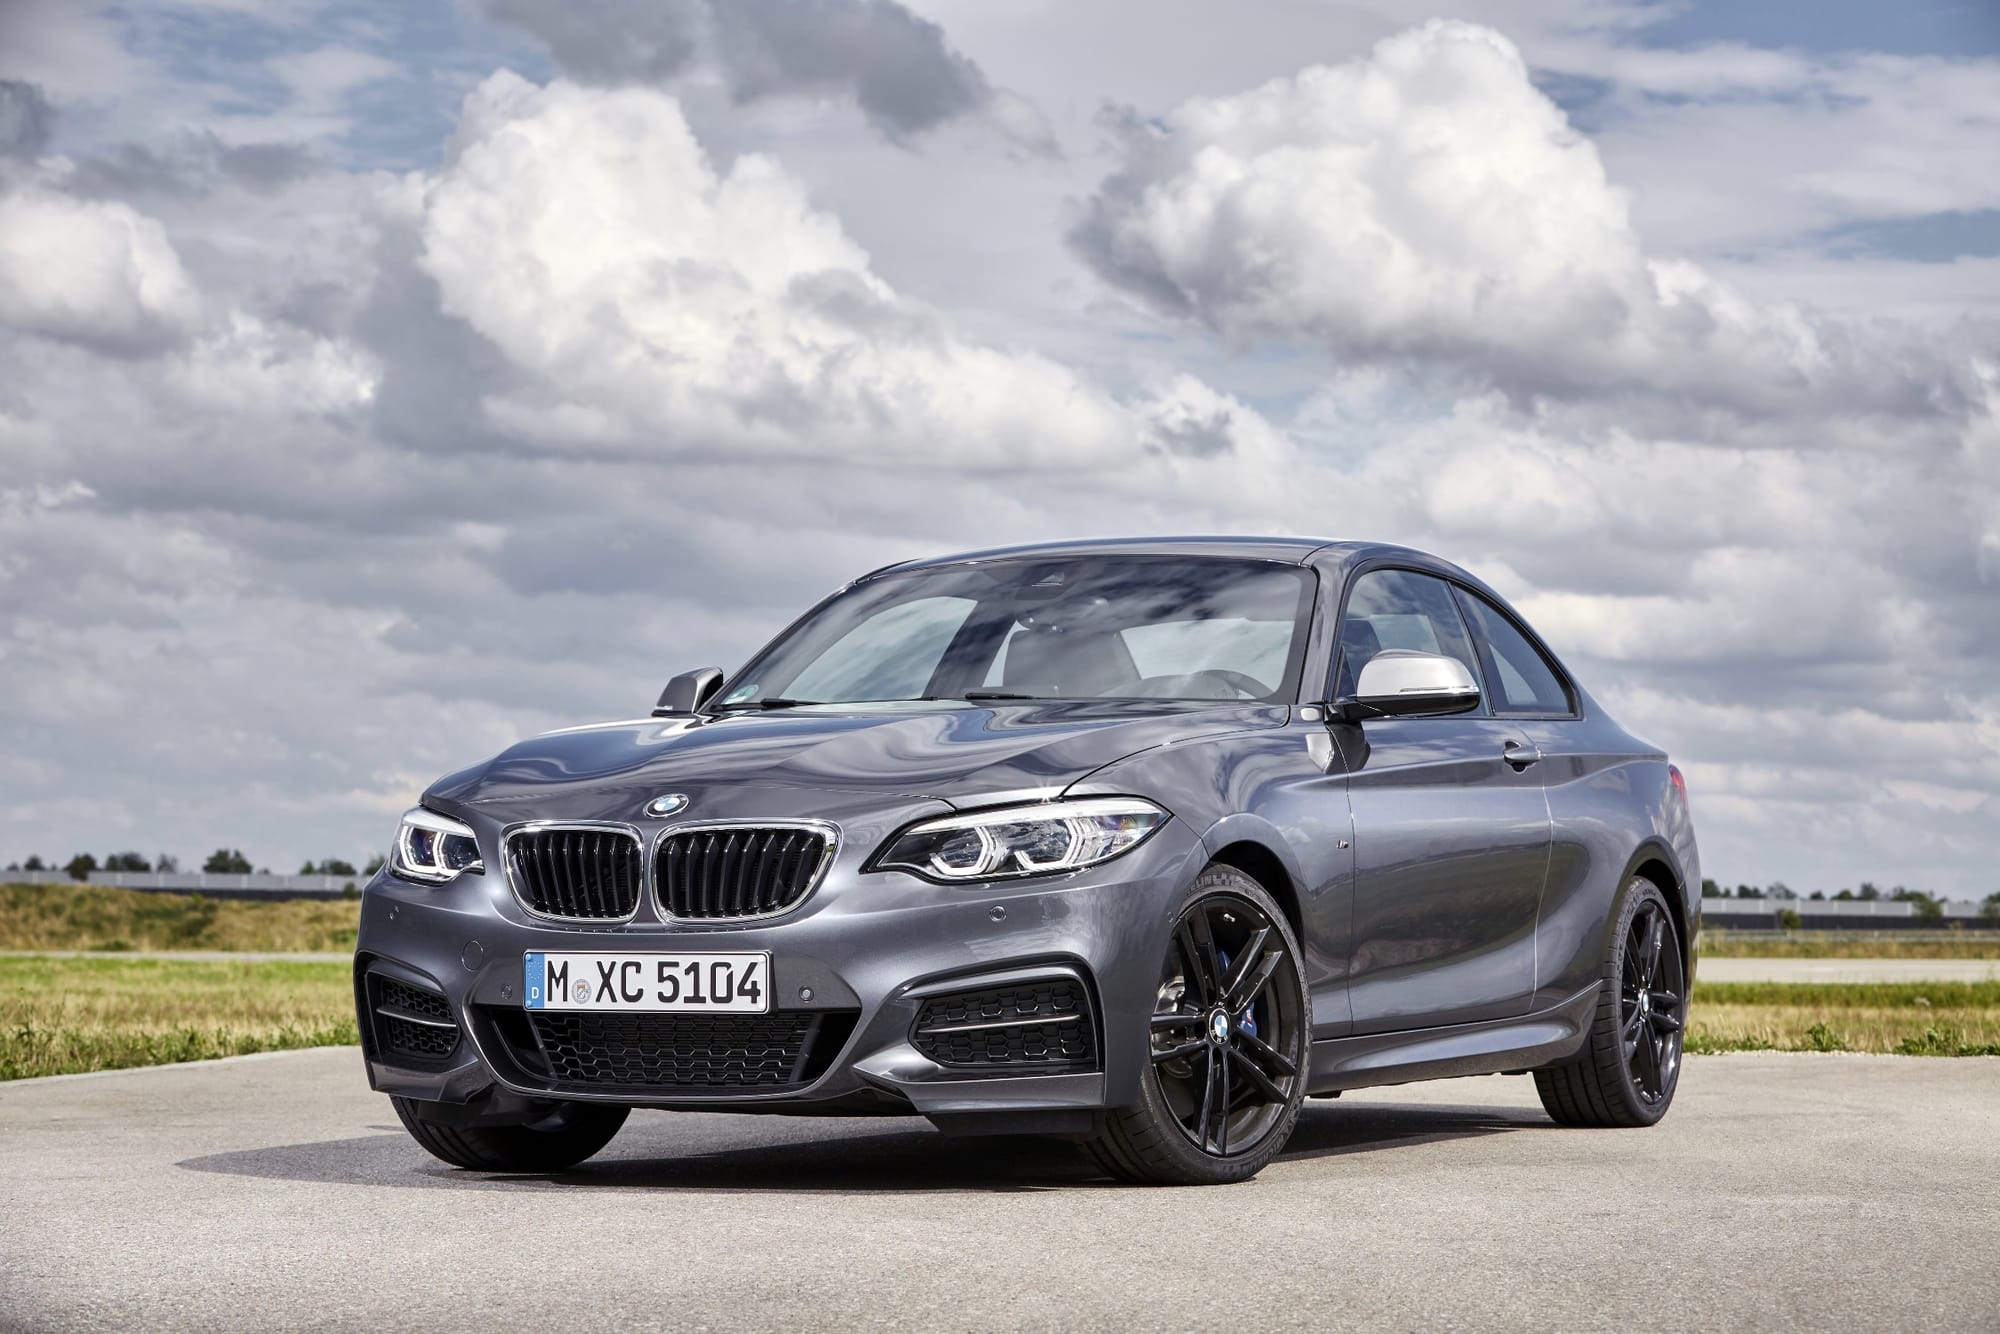 Bang for Your Bimmer Bucks: Top BMW Steals Under $20K